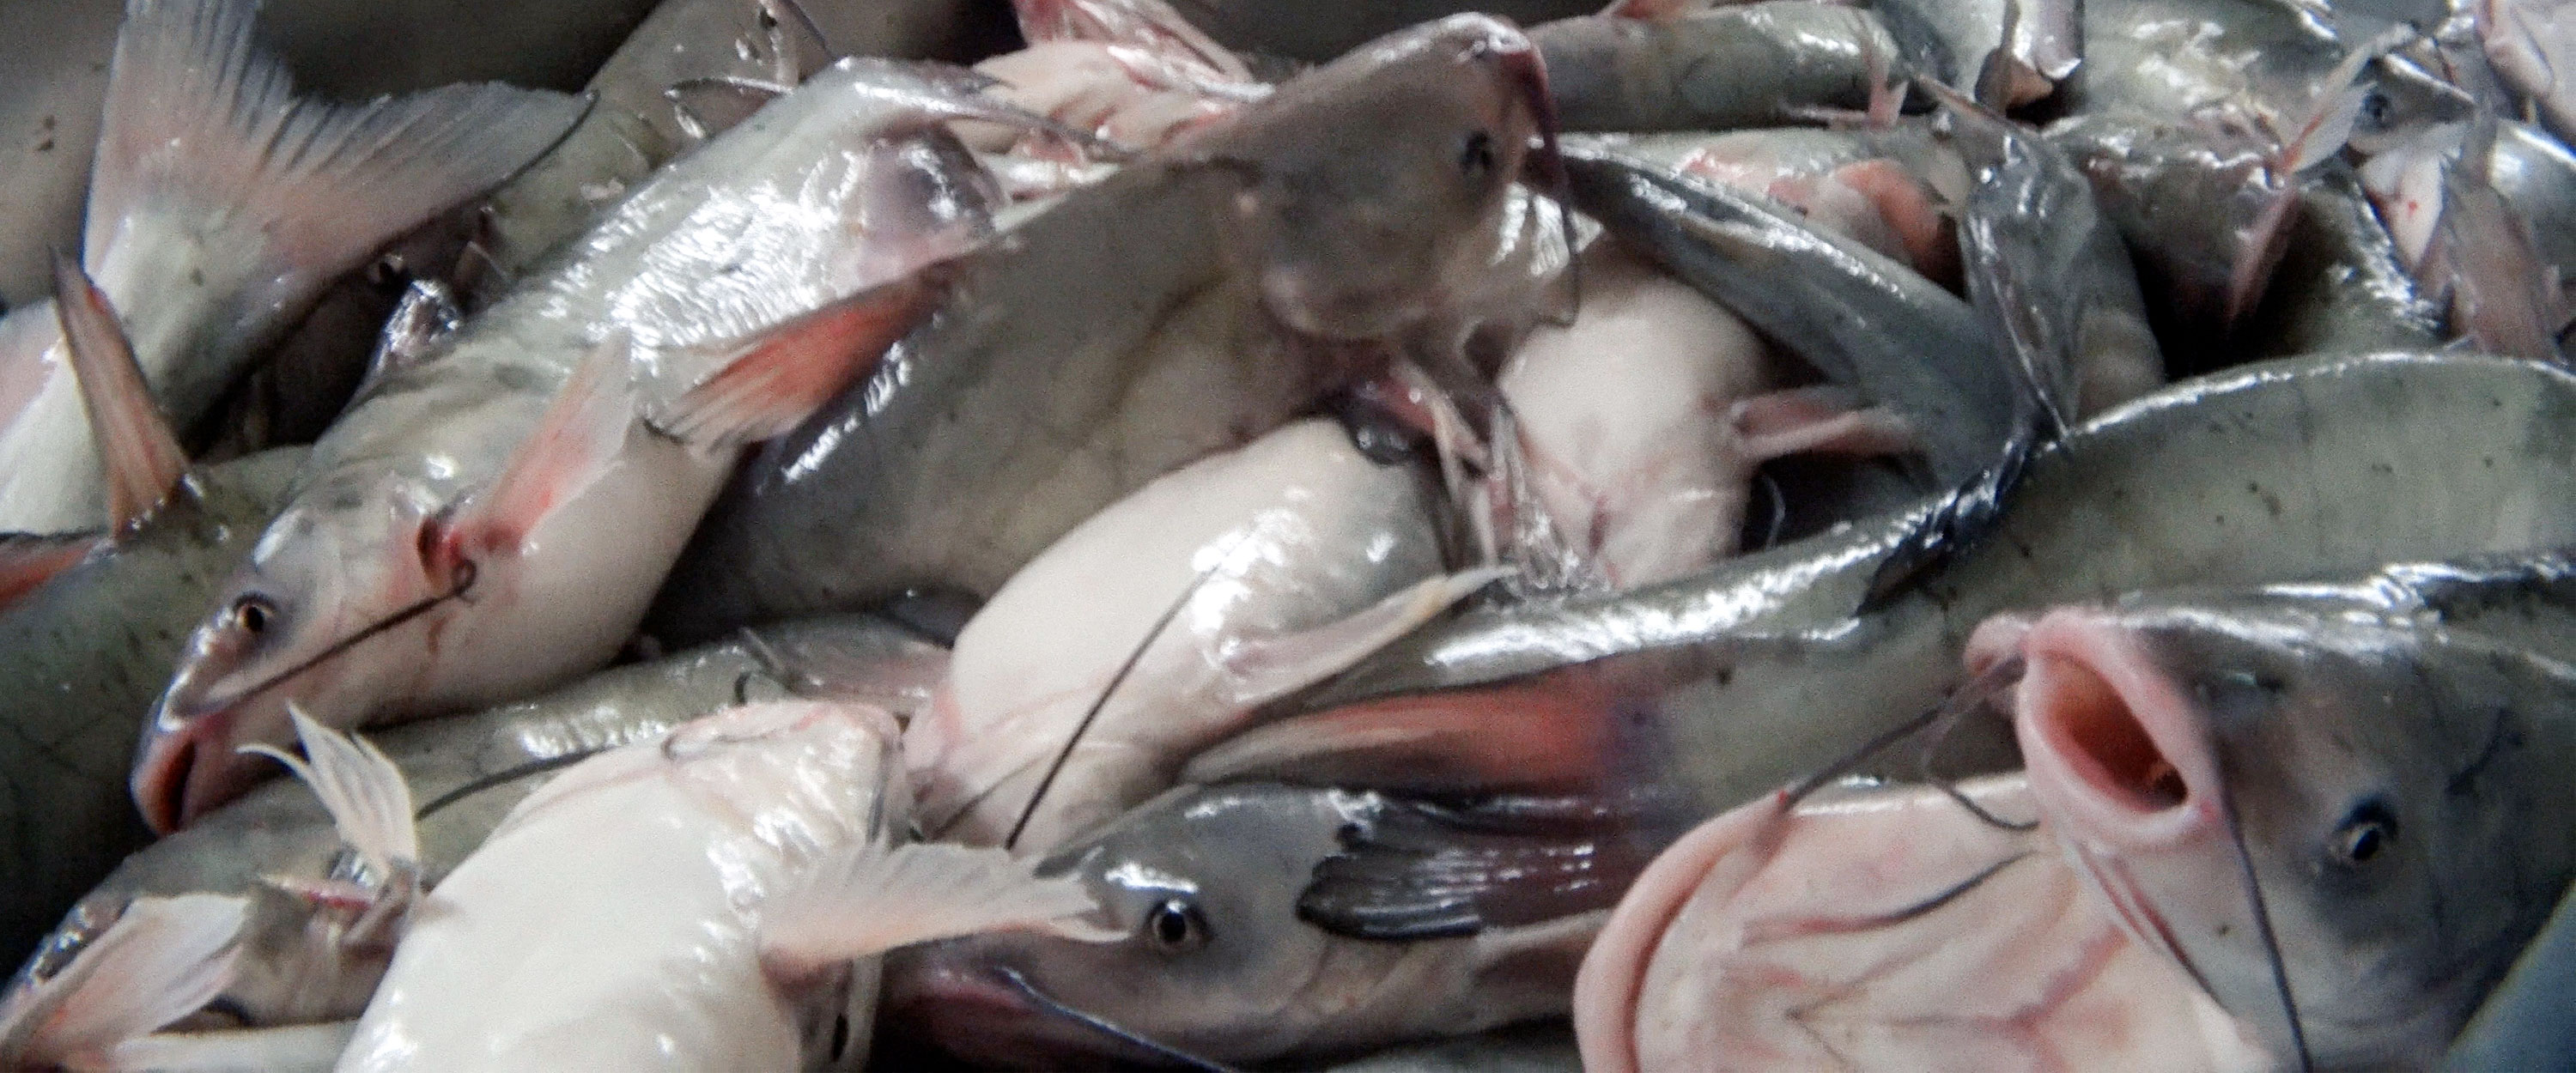 catfish on slaughterhouse conveyor belt